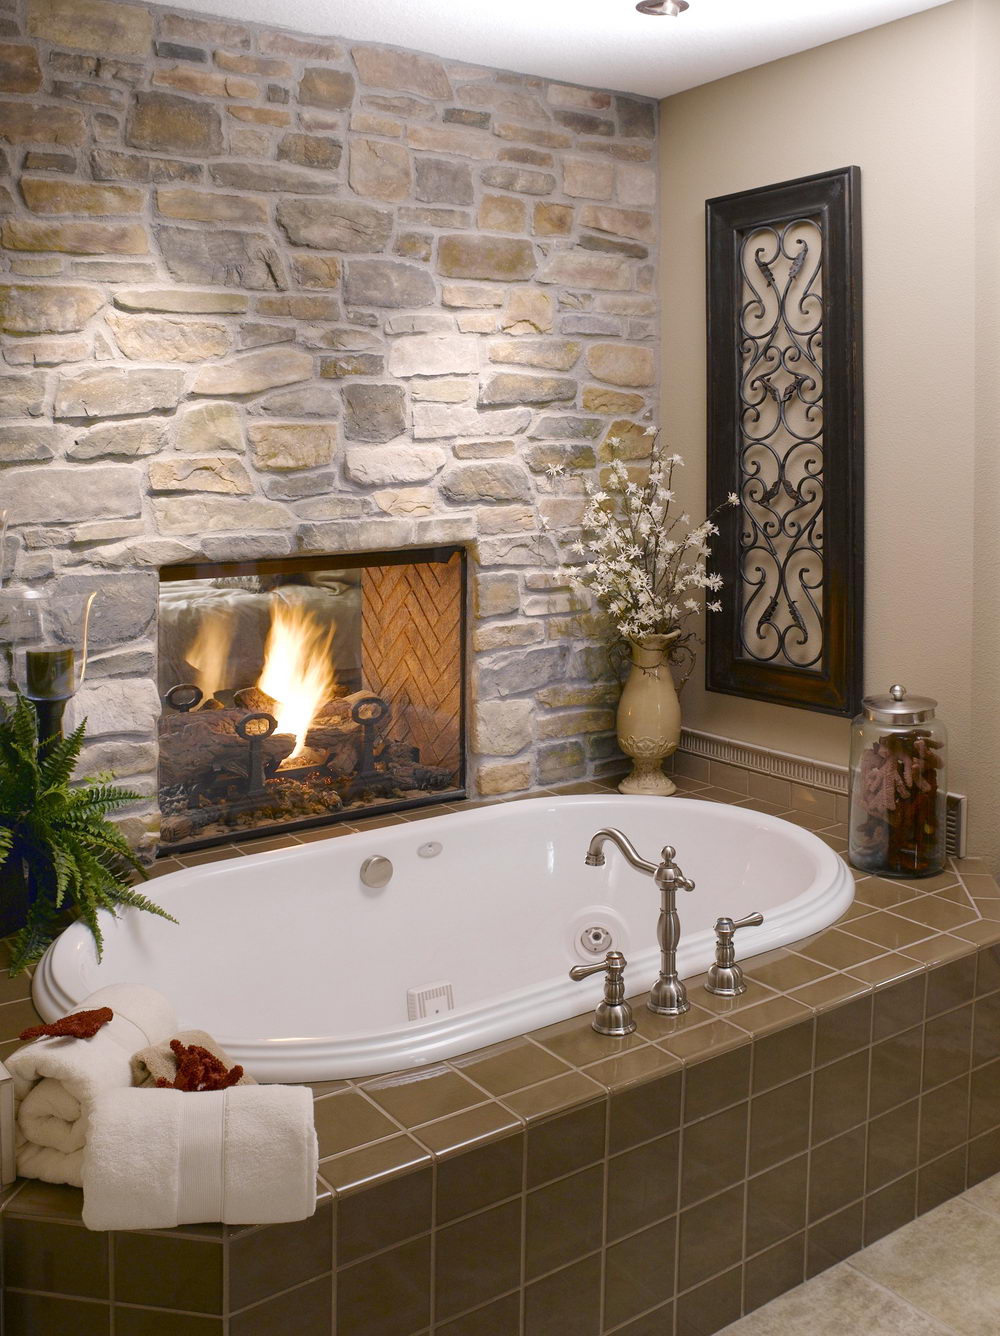 The Best Natural Bathroom Stone Tile - DecorIdeasBathroom.com